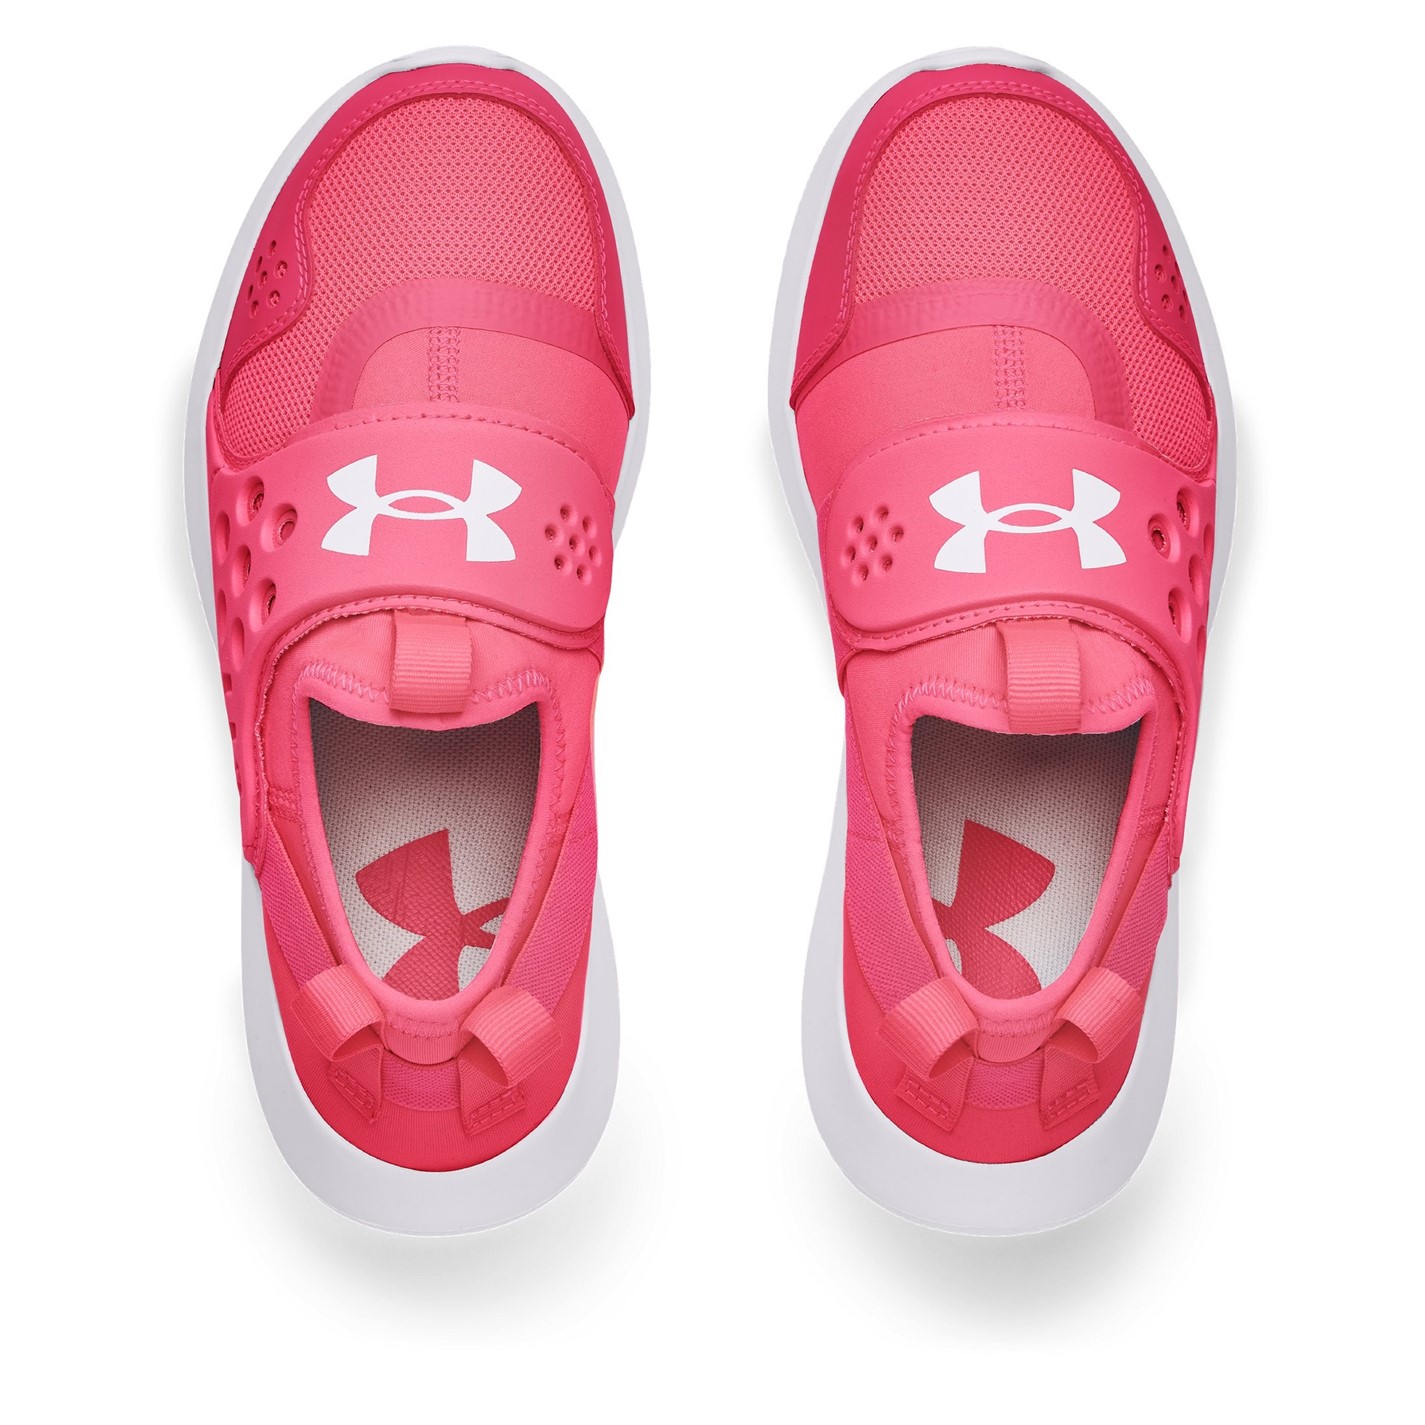 Adidasi sport Under Armour Pre School Runplay Juniors roz